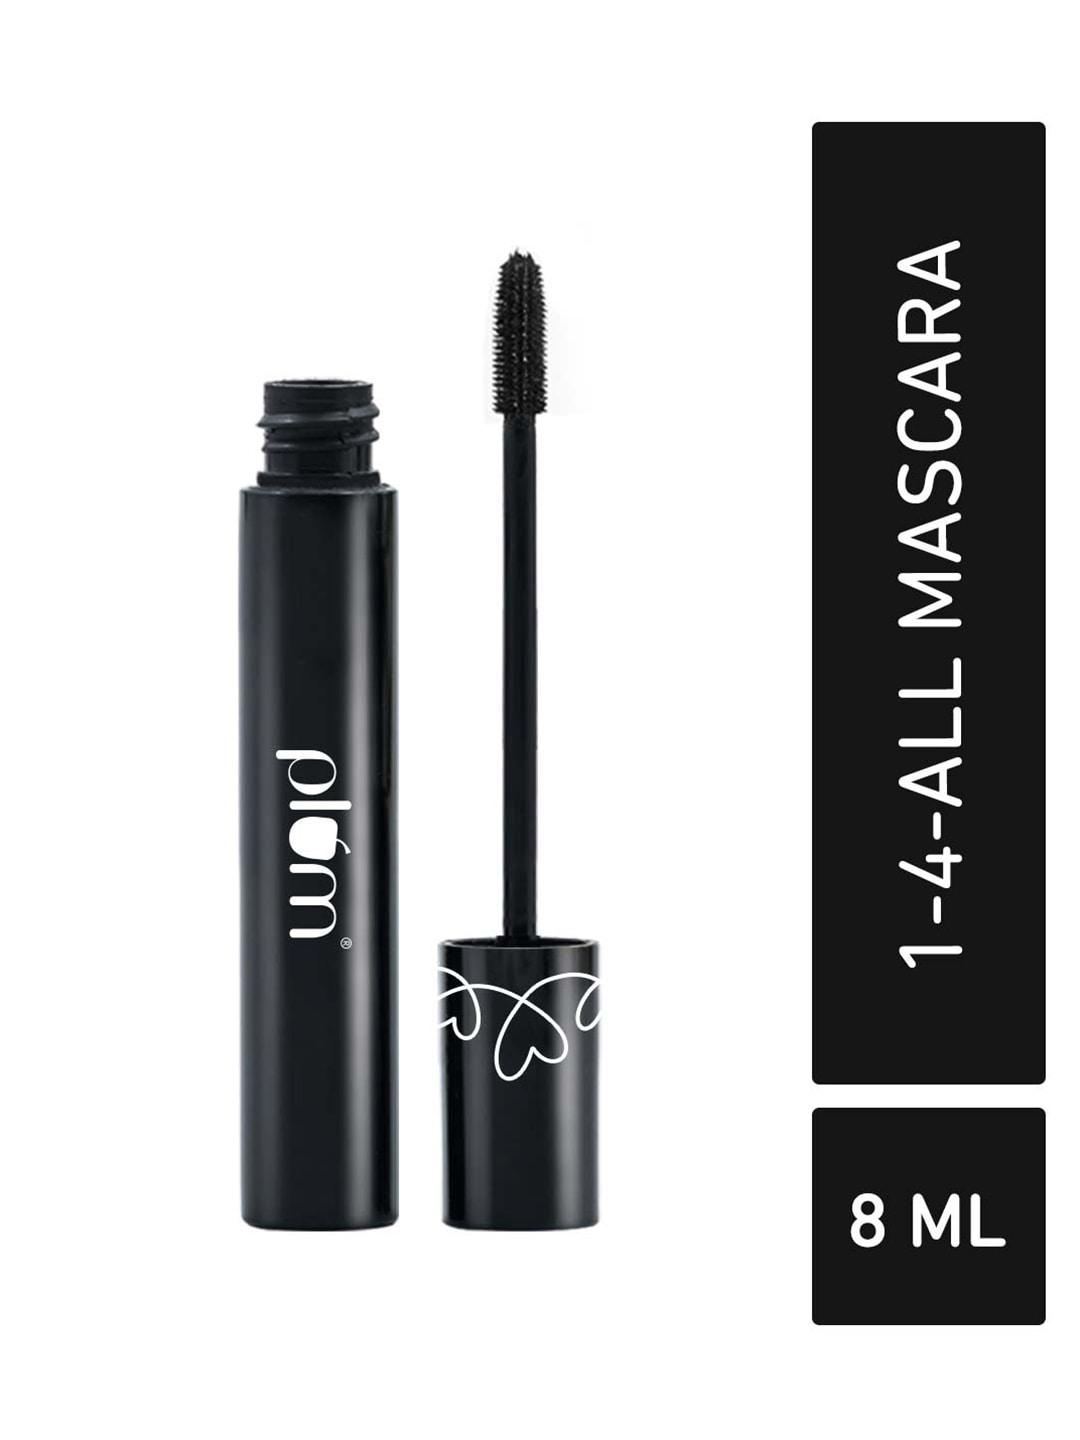 plum lash drama 1-4 water-resistant all mascara 8 ml - black 01